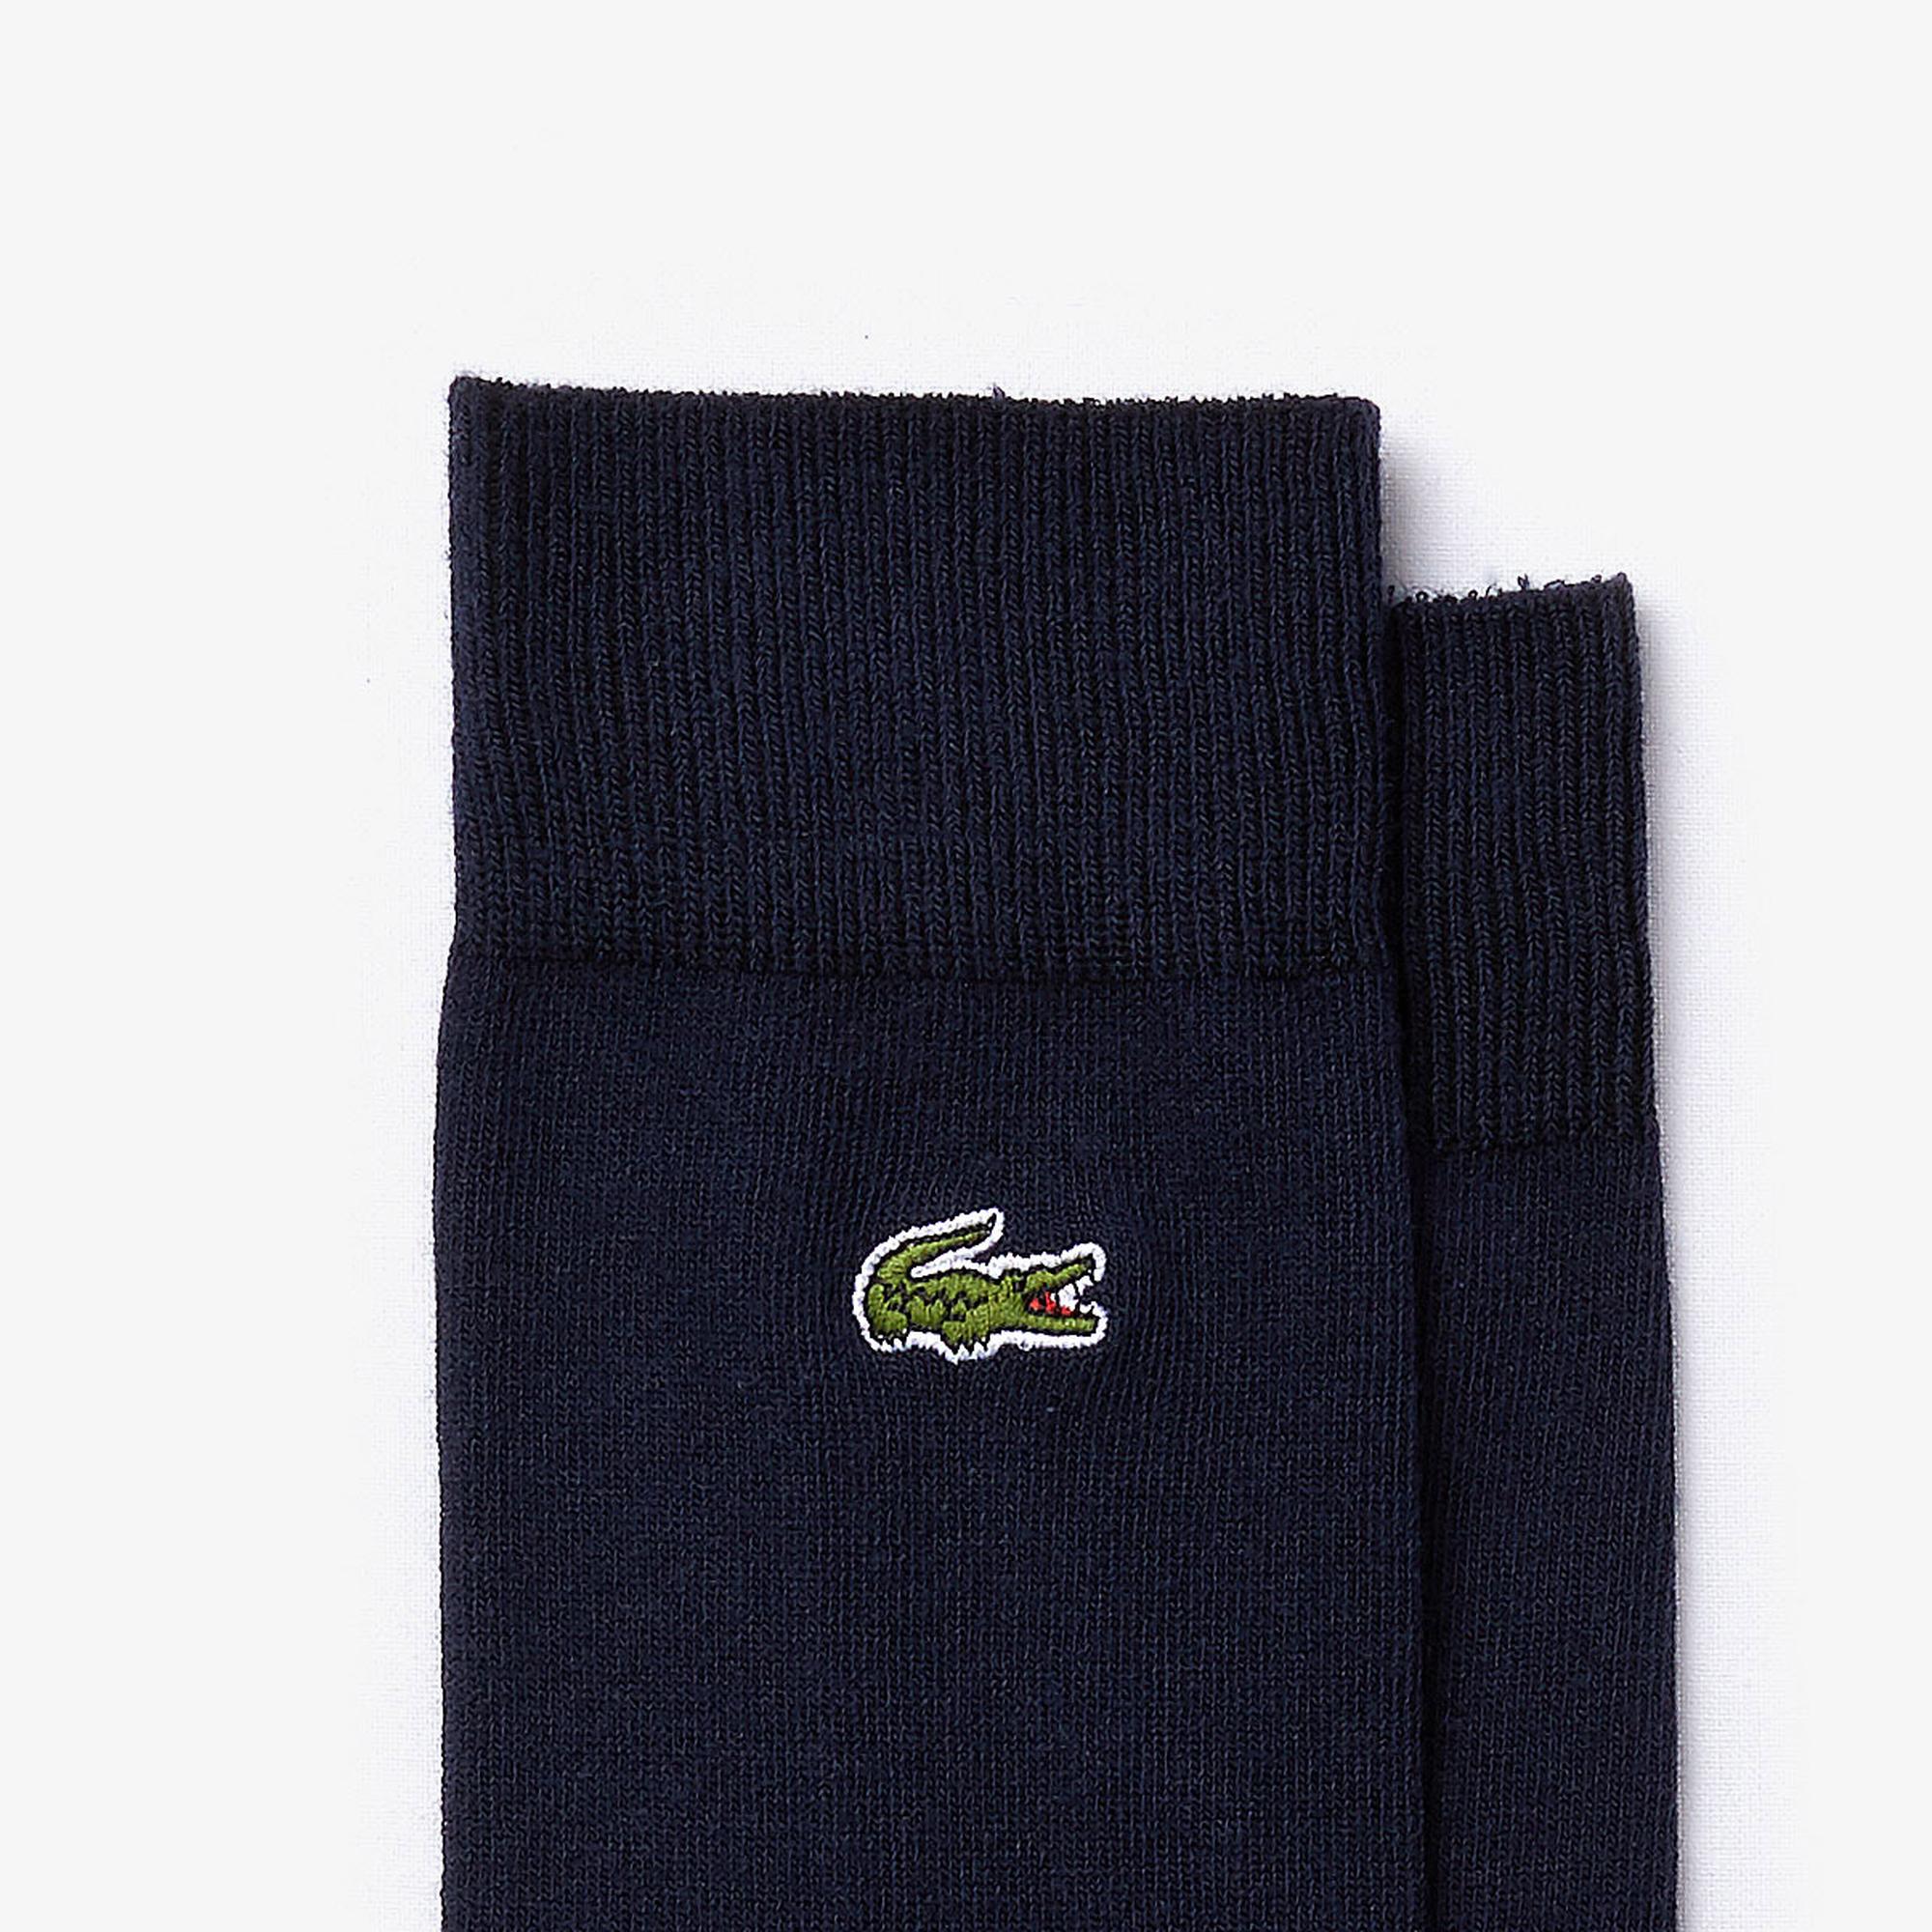 Lacoste Men's Embroidered Crocodile Cotton Blend Socks